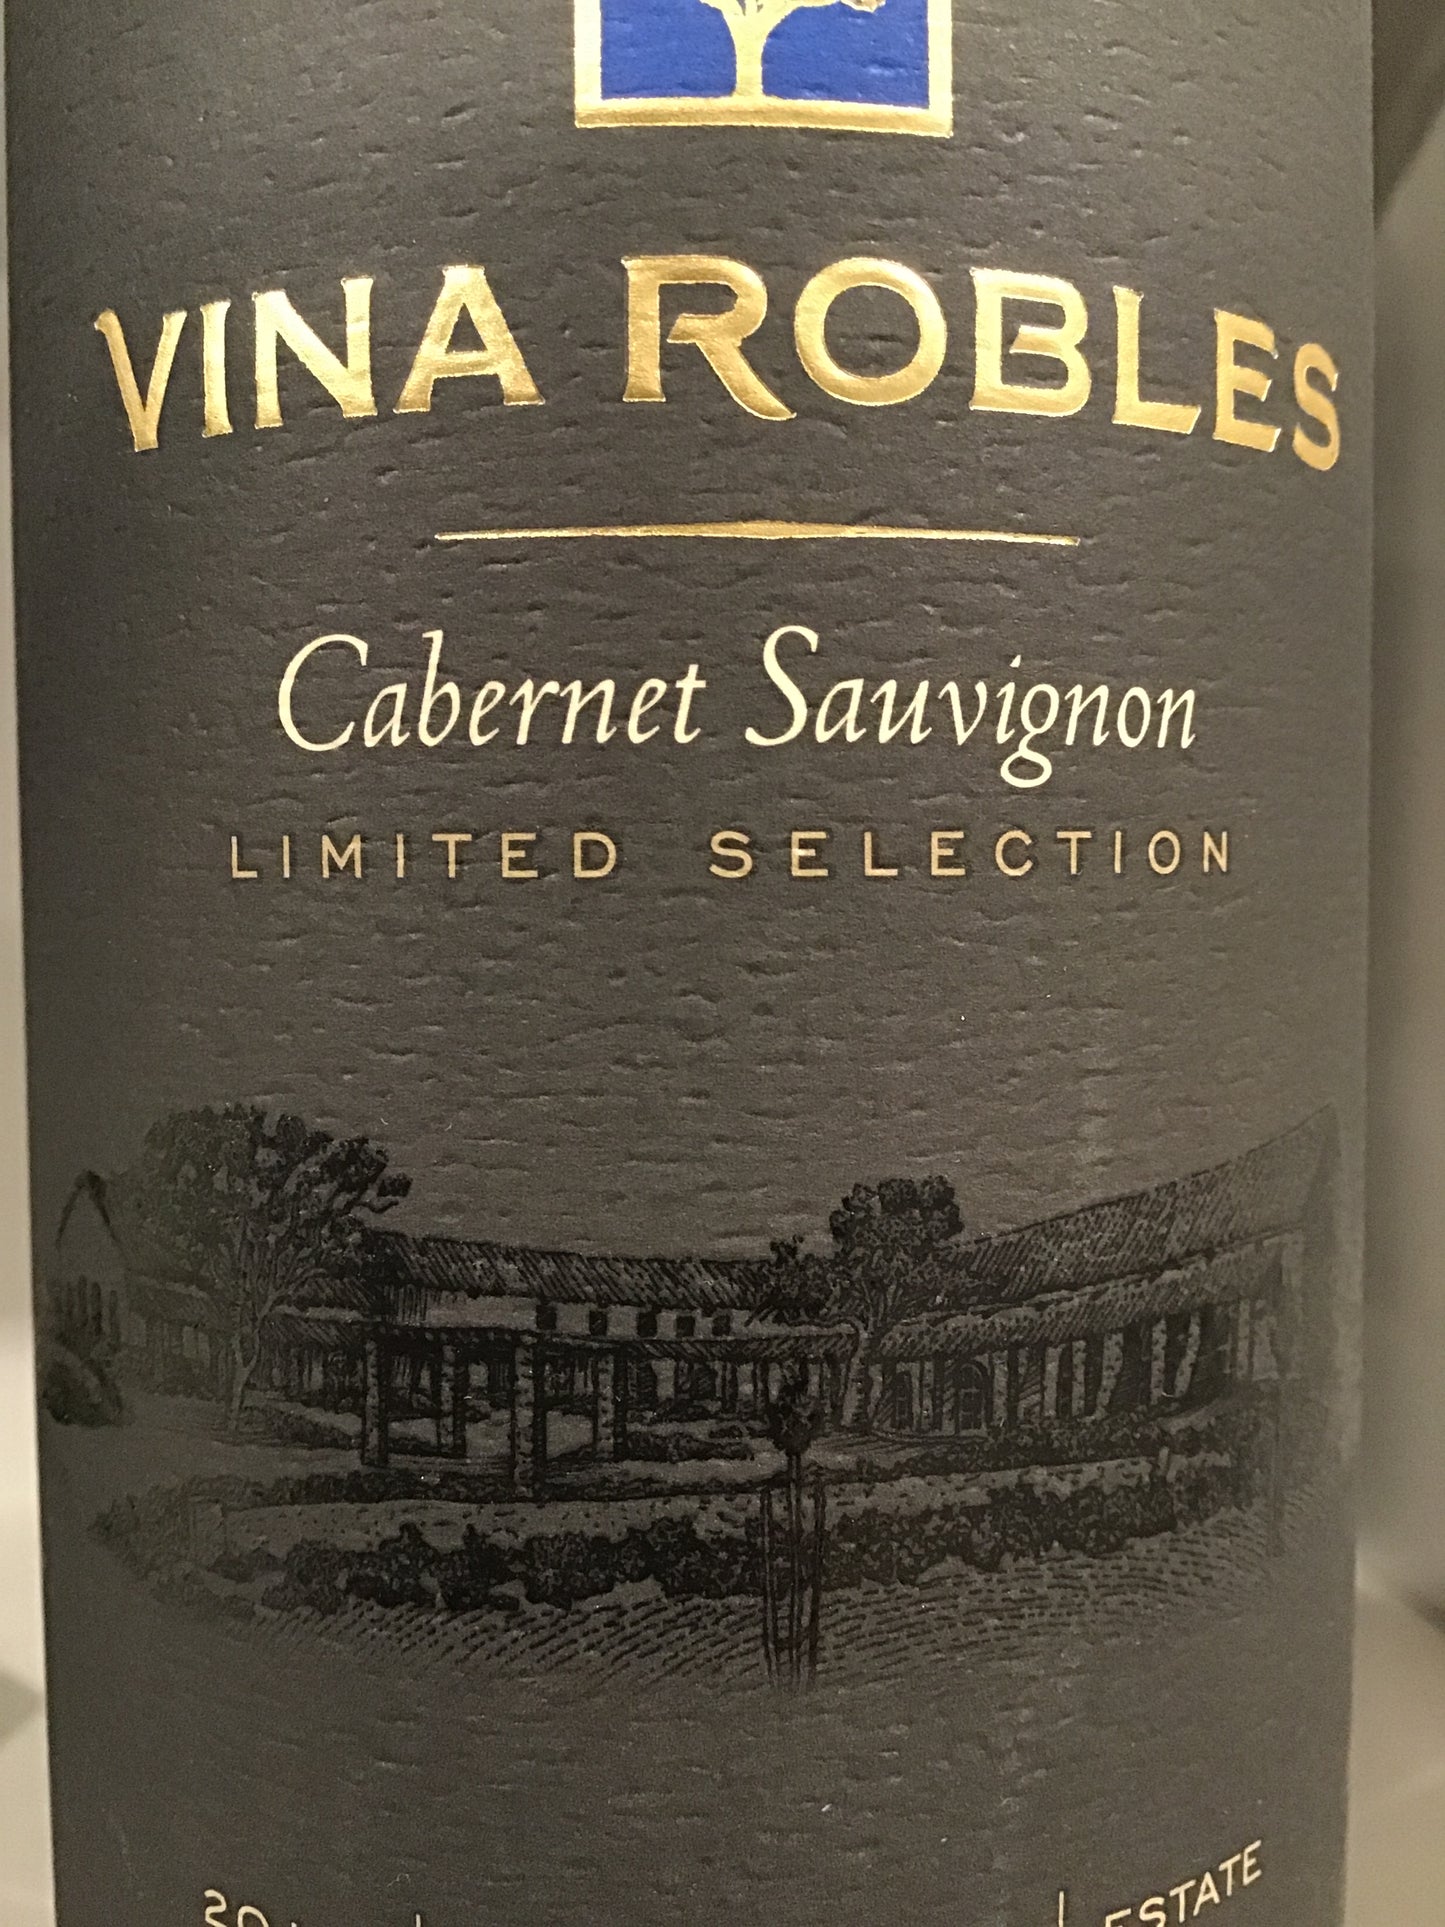 Vina Robles 'Limited Selection' - Cabernet Sauvignon - Paso Robles